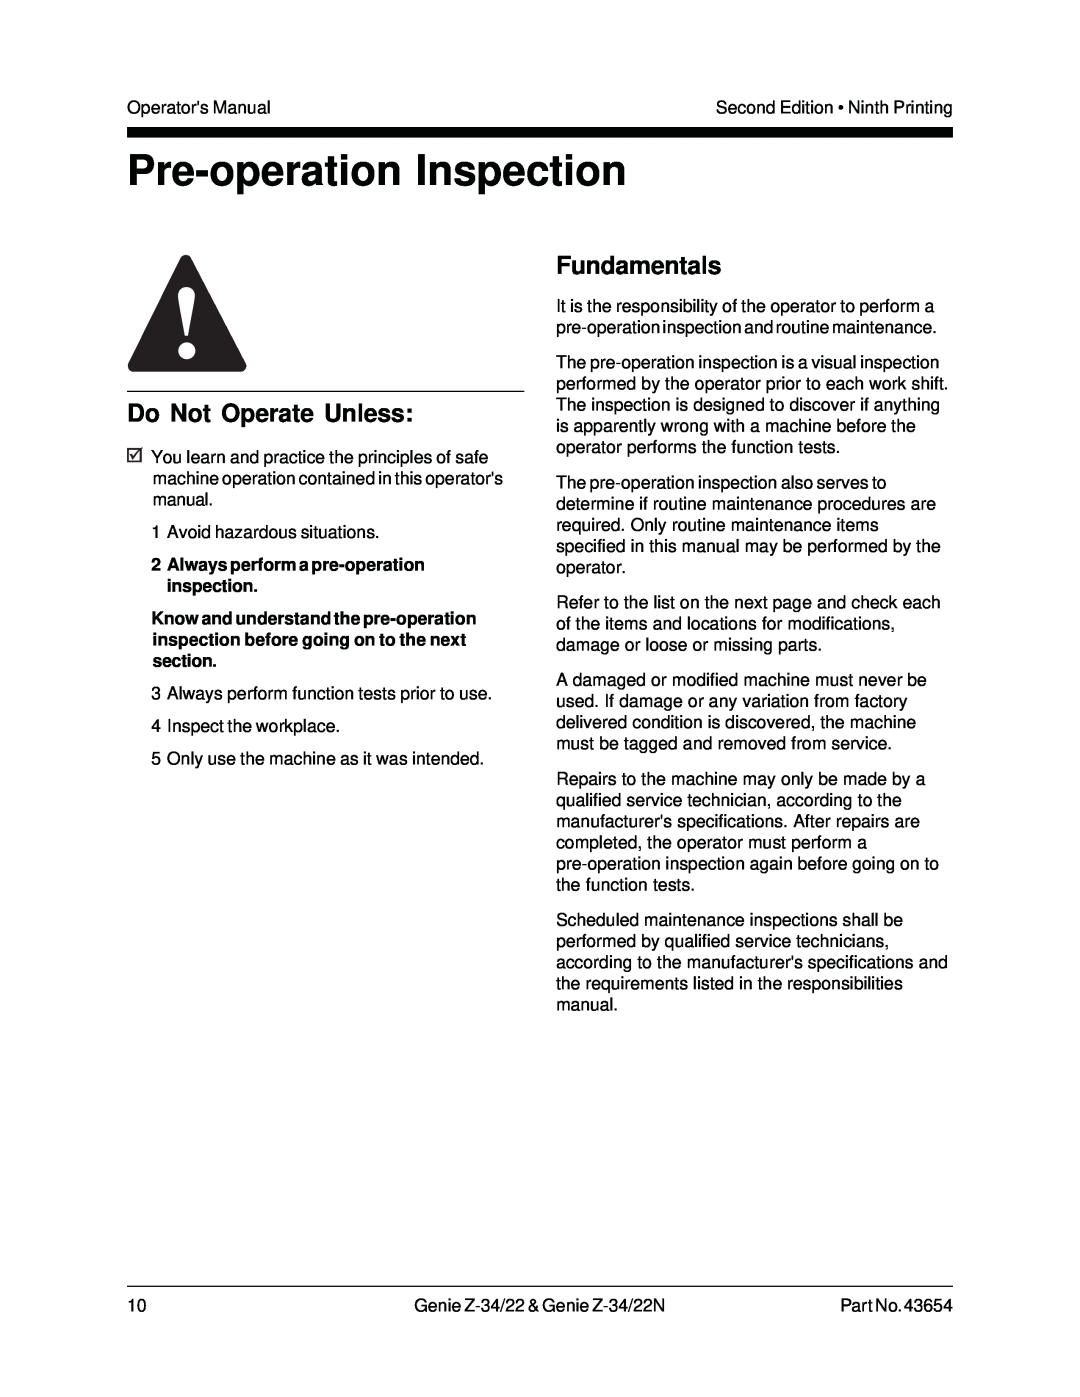 Genie Z-34, Z-22 Pre-operation Inspection, Fundamentals, Always perform a pre-operation inspection, Do Not Operate Unless 